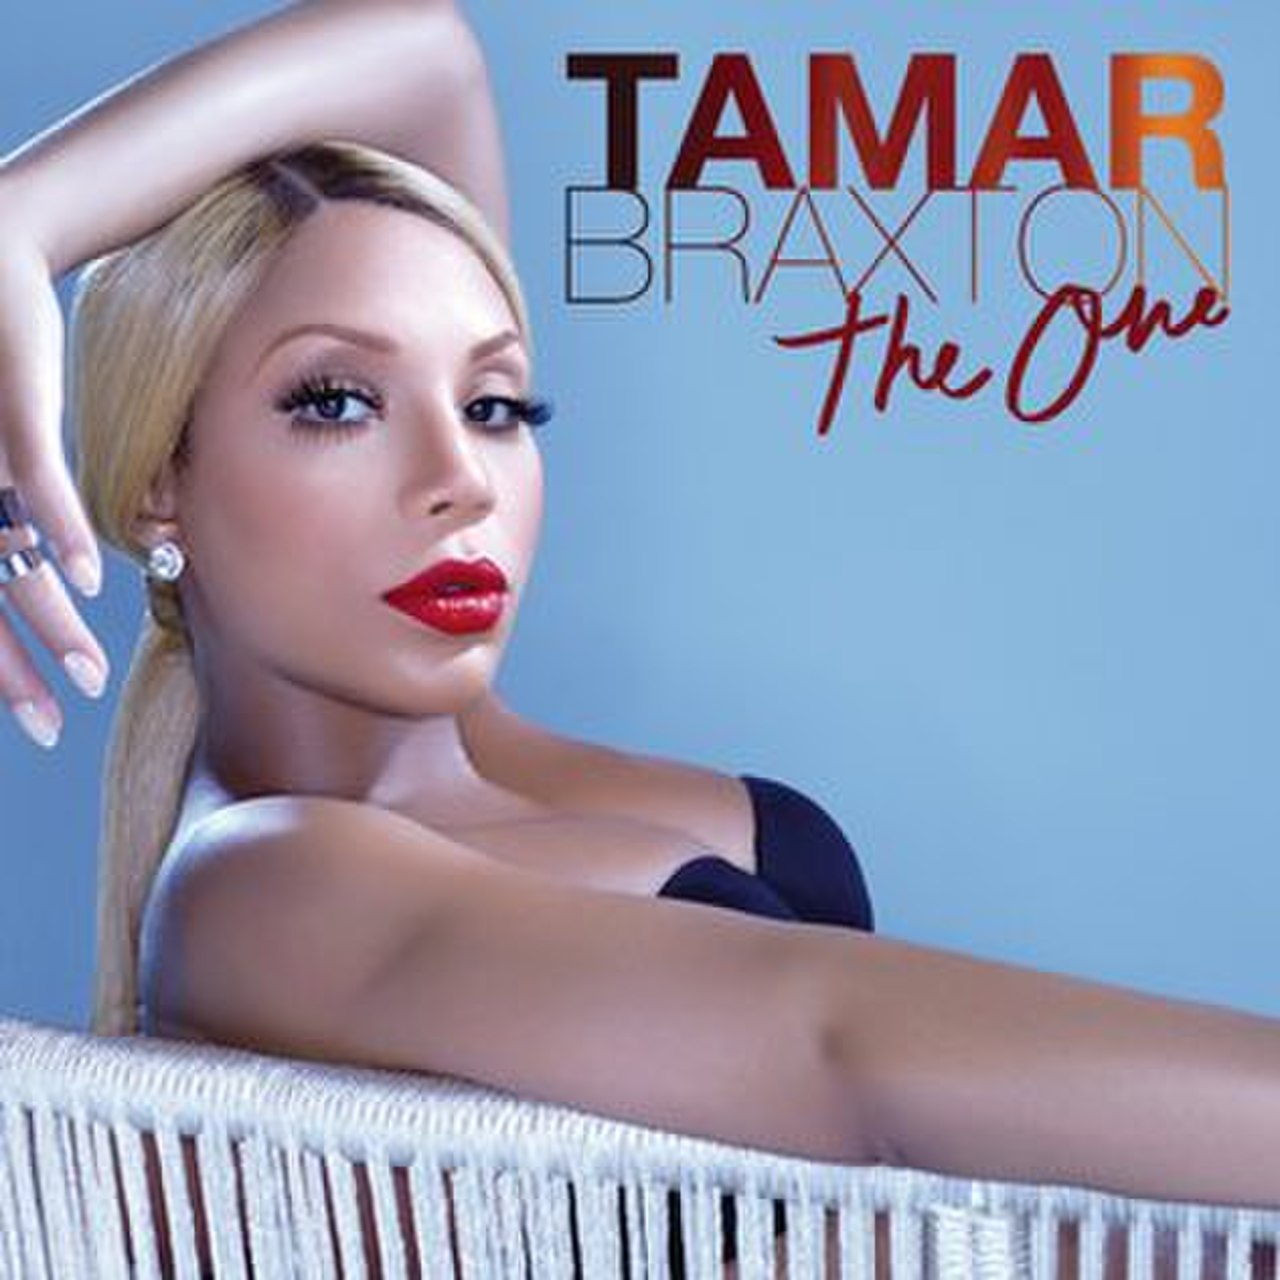 Tamar Braxton — The One cover artwork